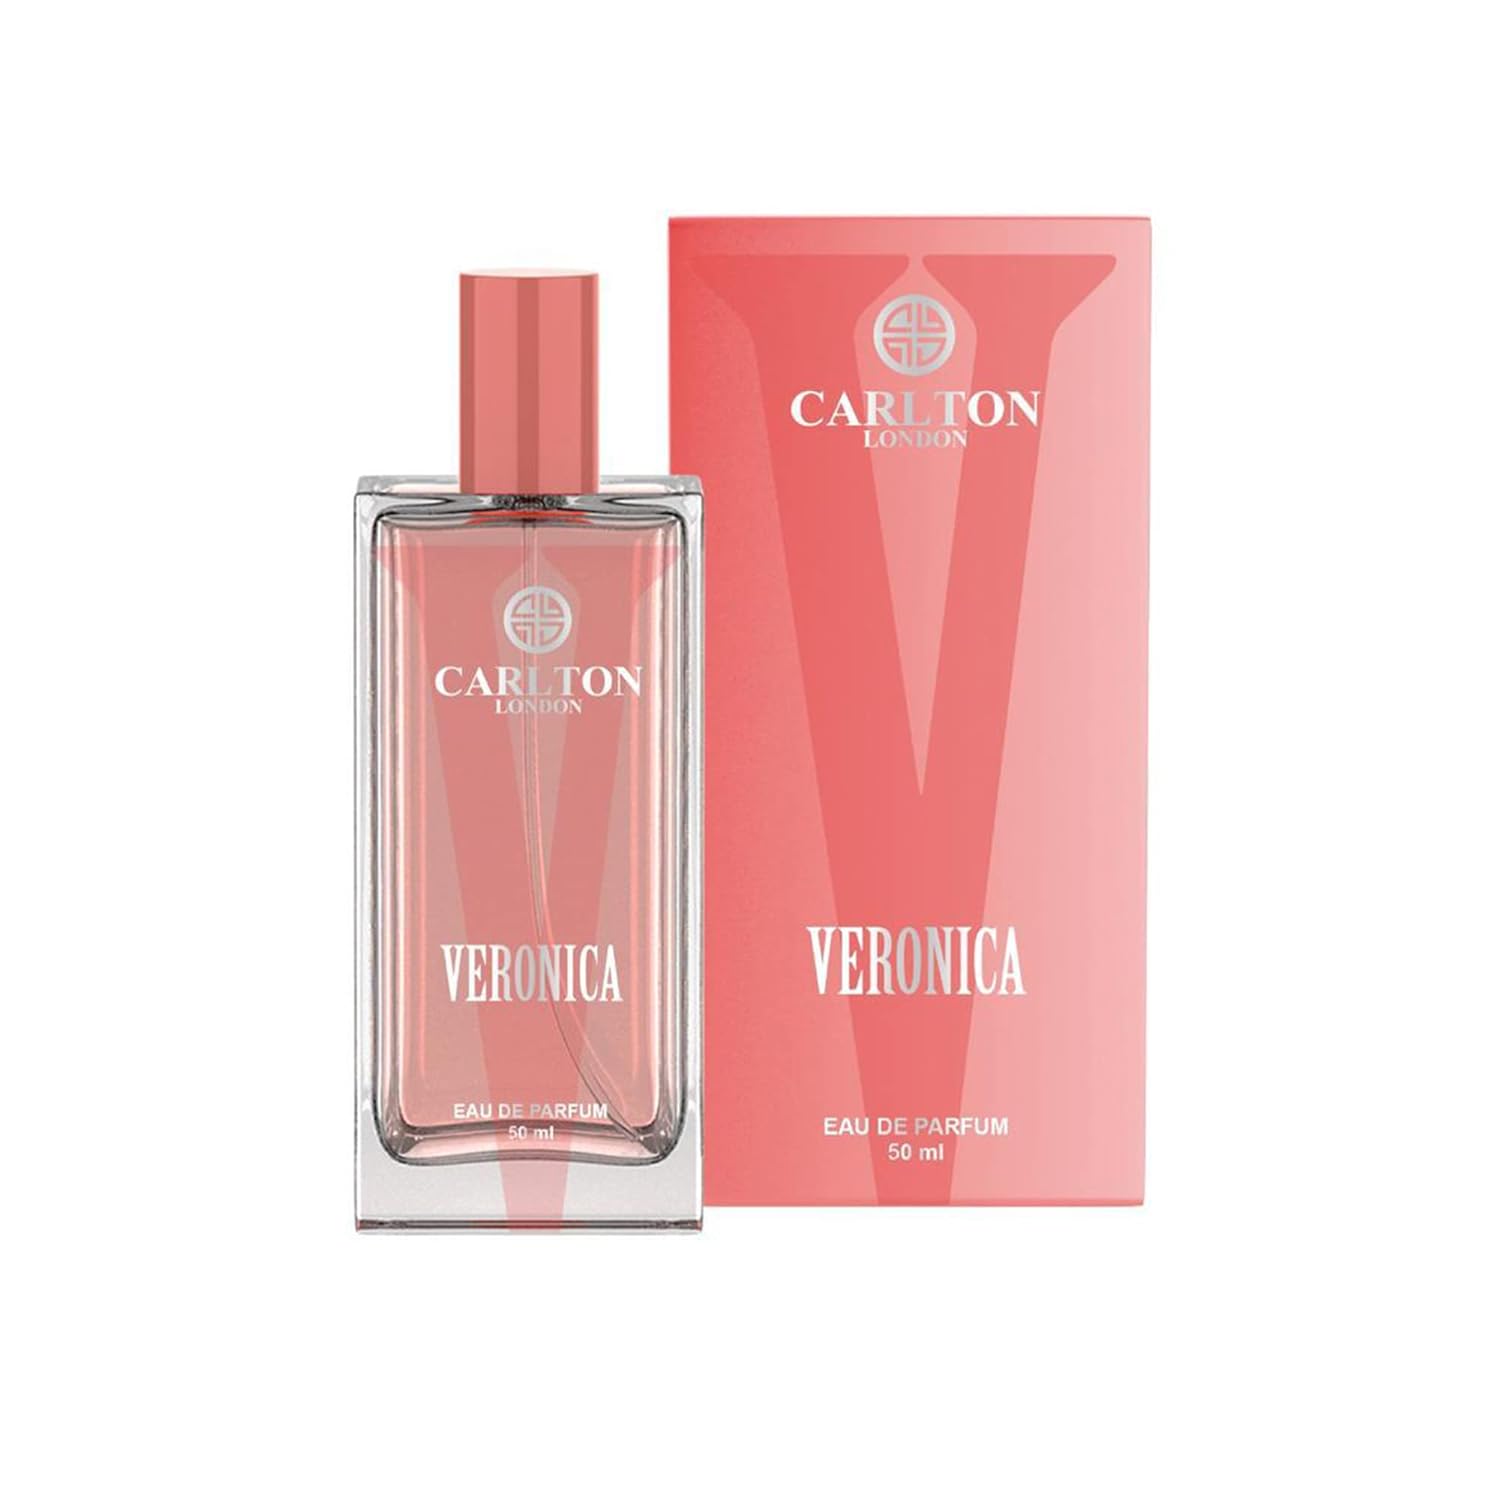 Carlton London Women Veronica Eau de Parfum – 50 ml | Luxury Long Lasting Scent, Floral and Fruity Fragrance for Women | Premium Travel Friendly Perfume - YuvaFlowers